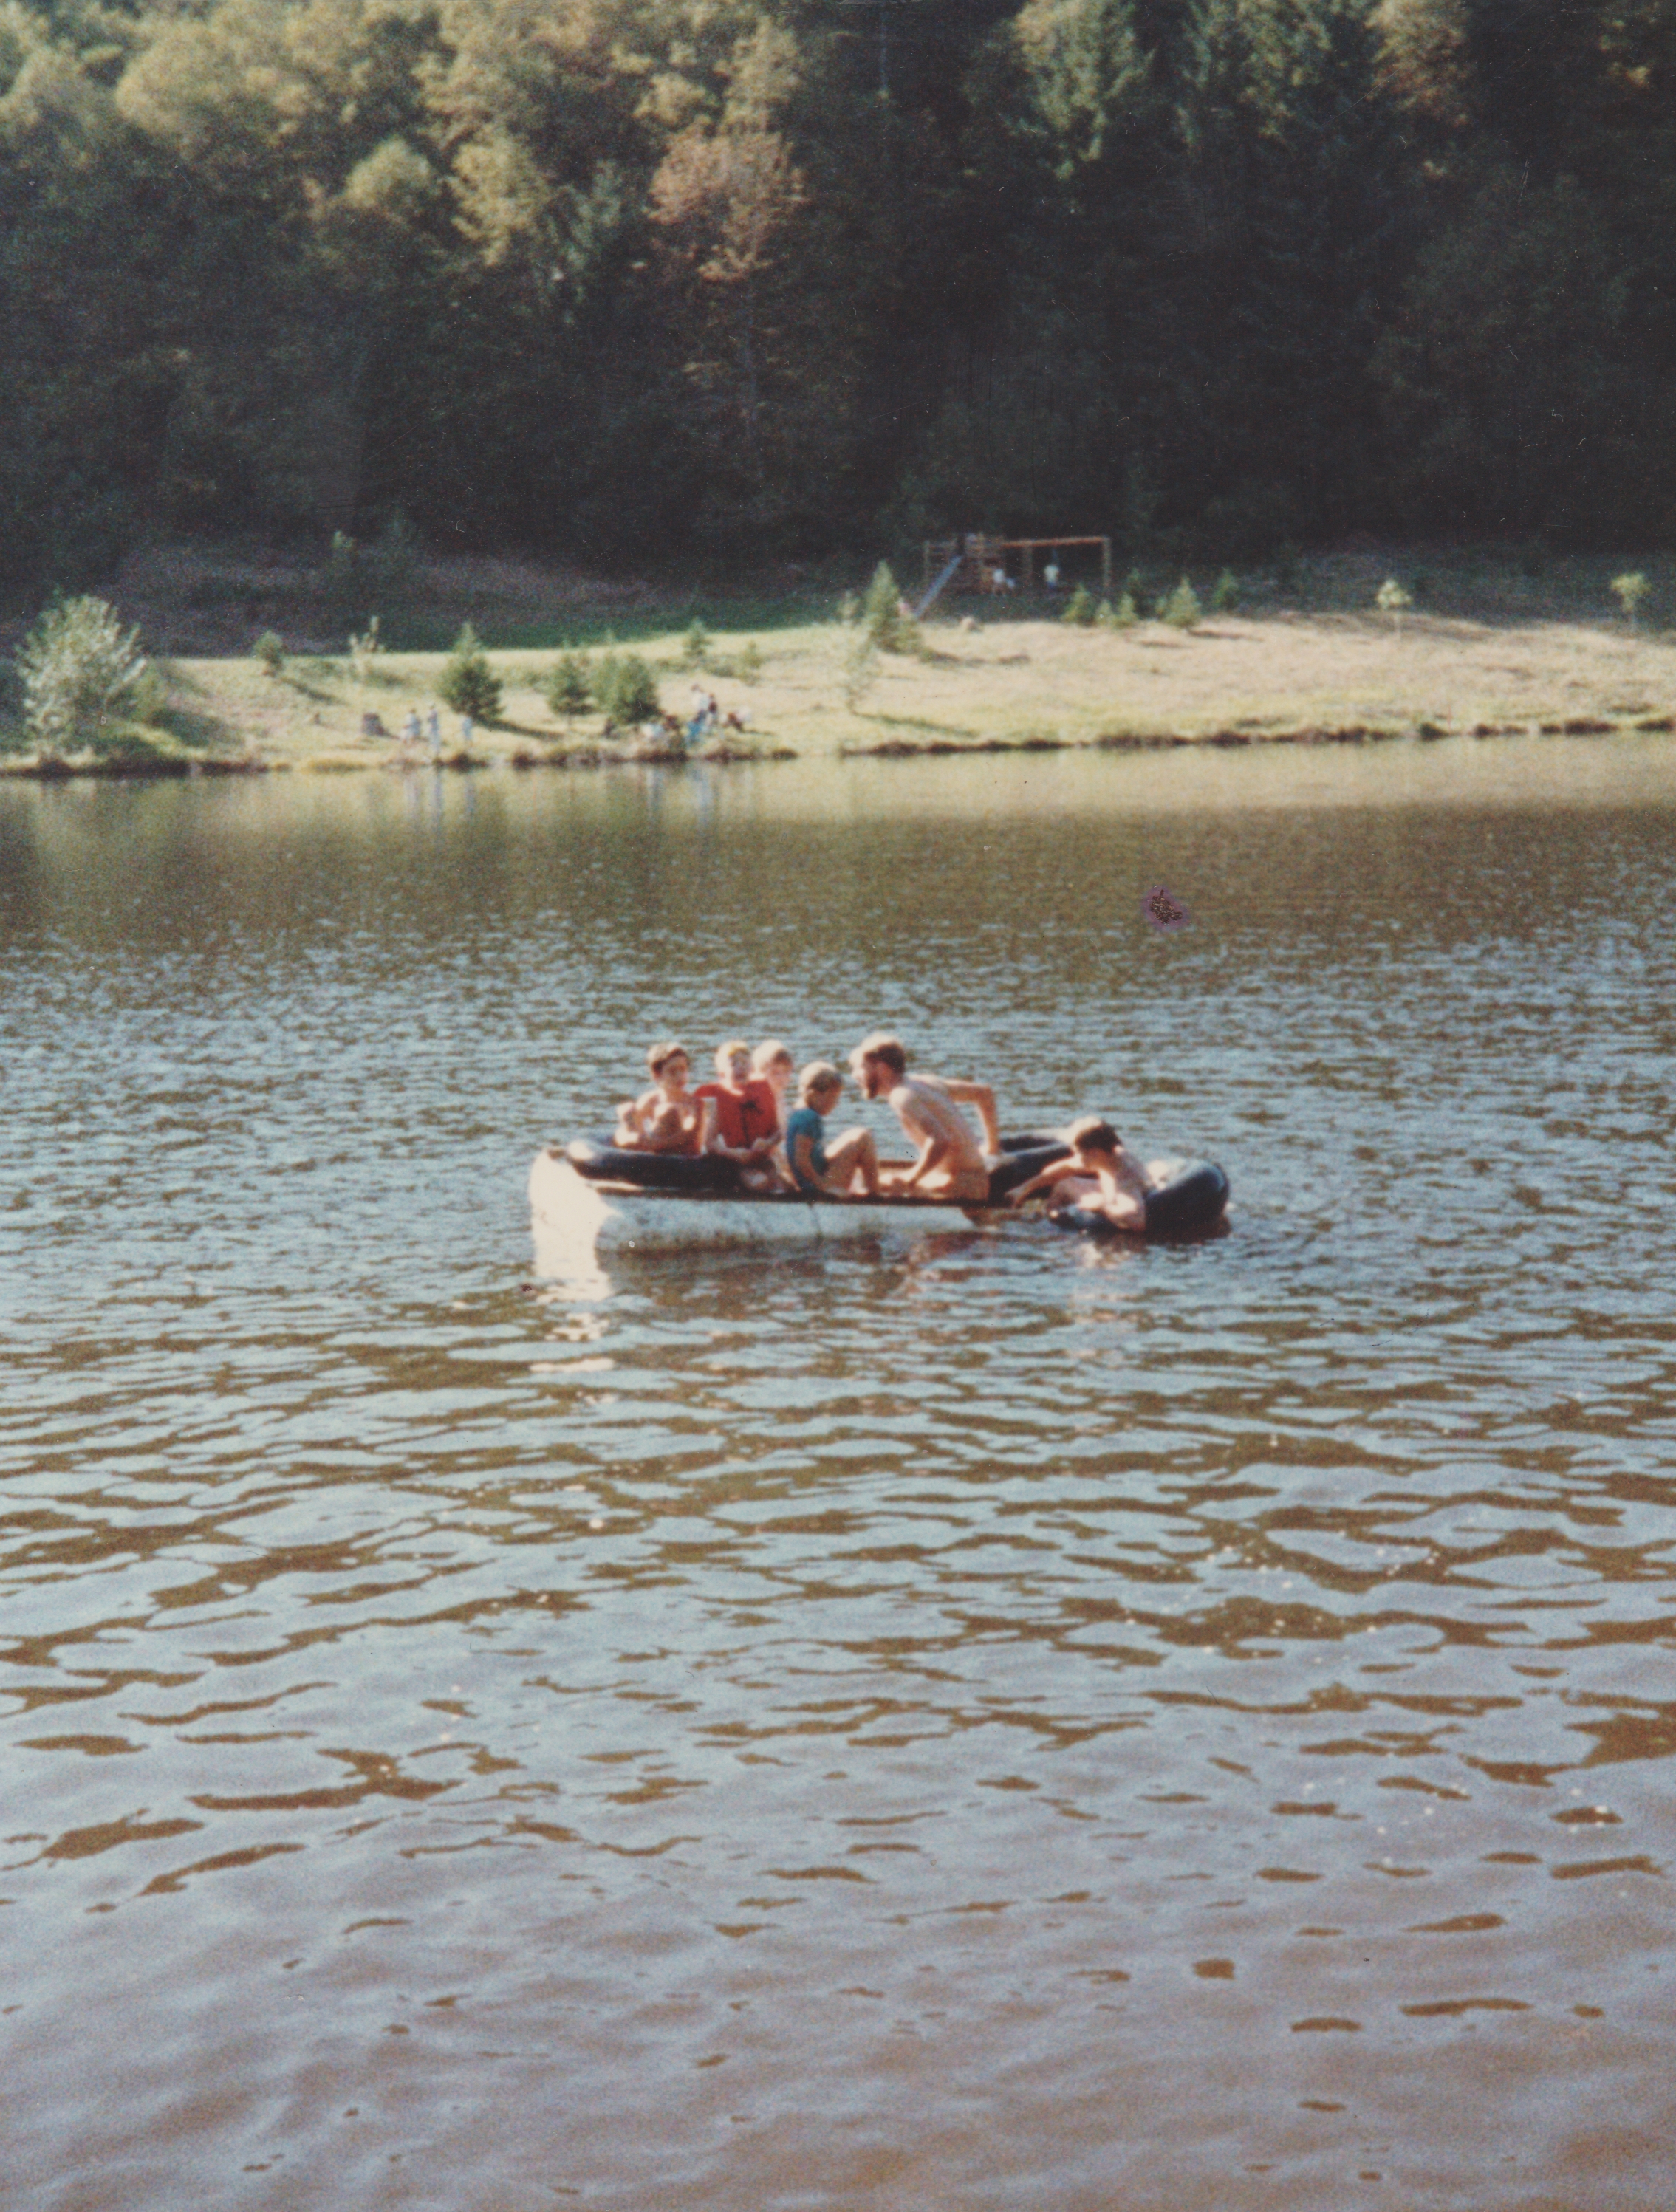 1980's maybe - Katie maybe - lake - kids - man - raft thing.jpg